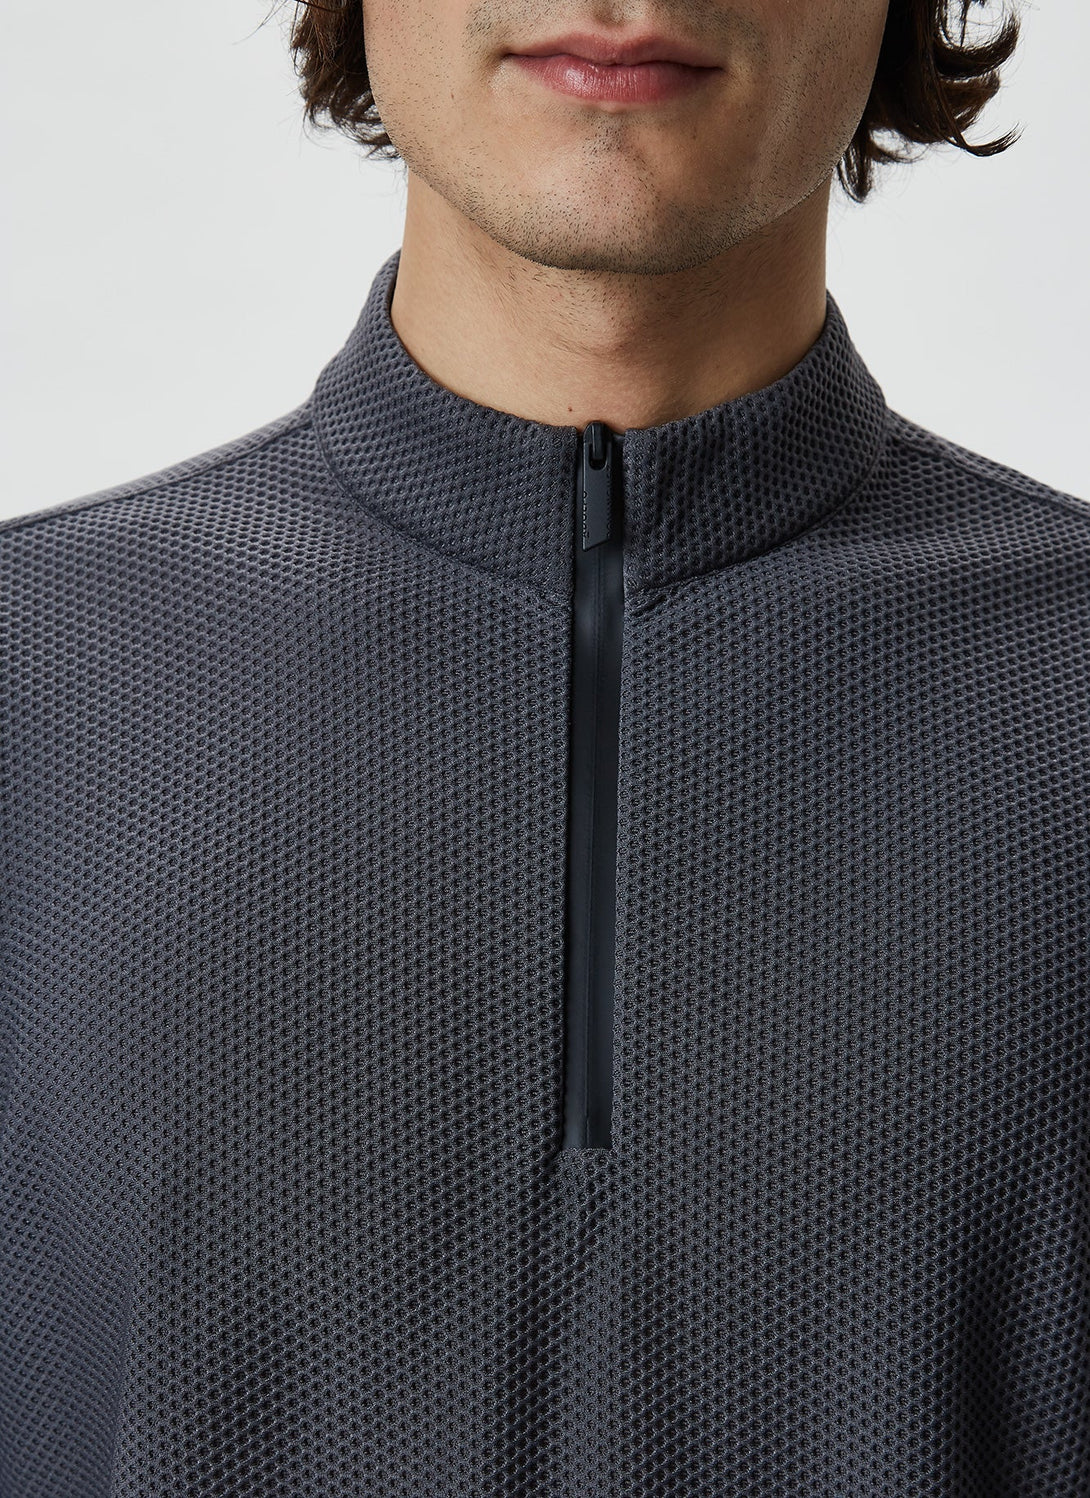 Men Long-Sleeve T-Shirt | Grey Perkins Long-Sleeved T-Shirt by Spanish designer Adolfo Dominguez